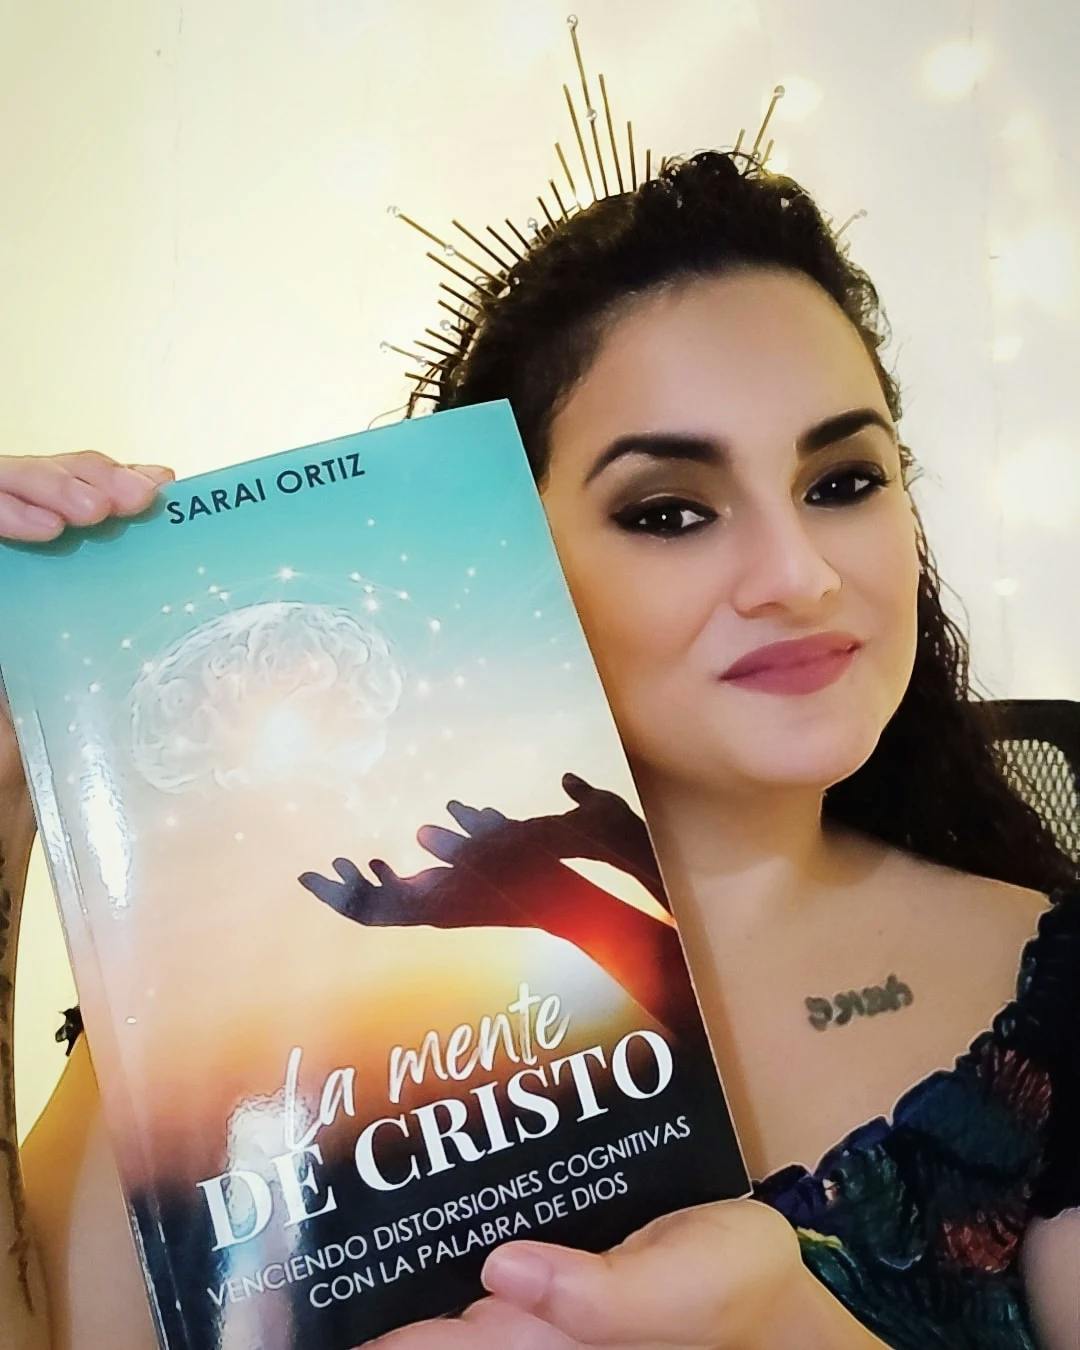 Sarai Ortiz showcasing her newly released book.